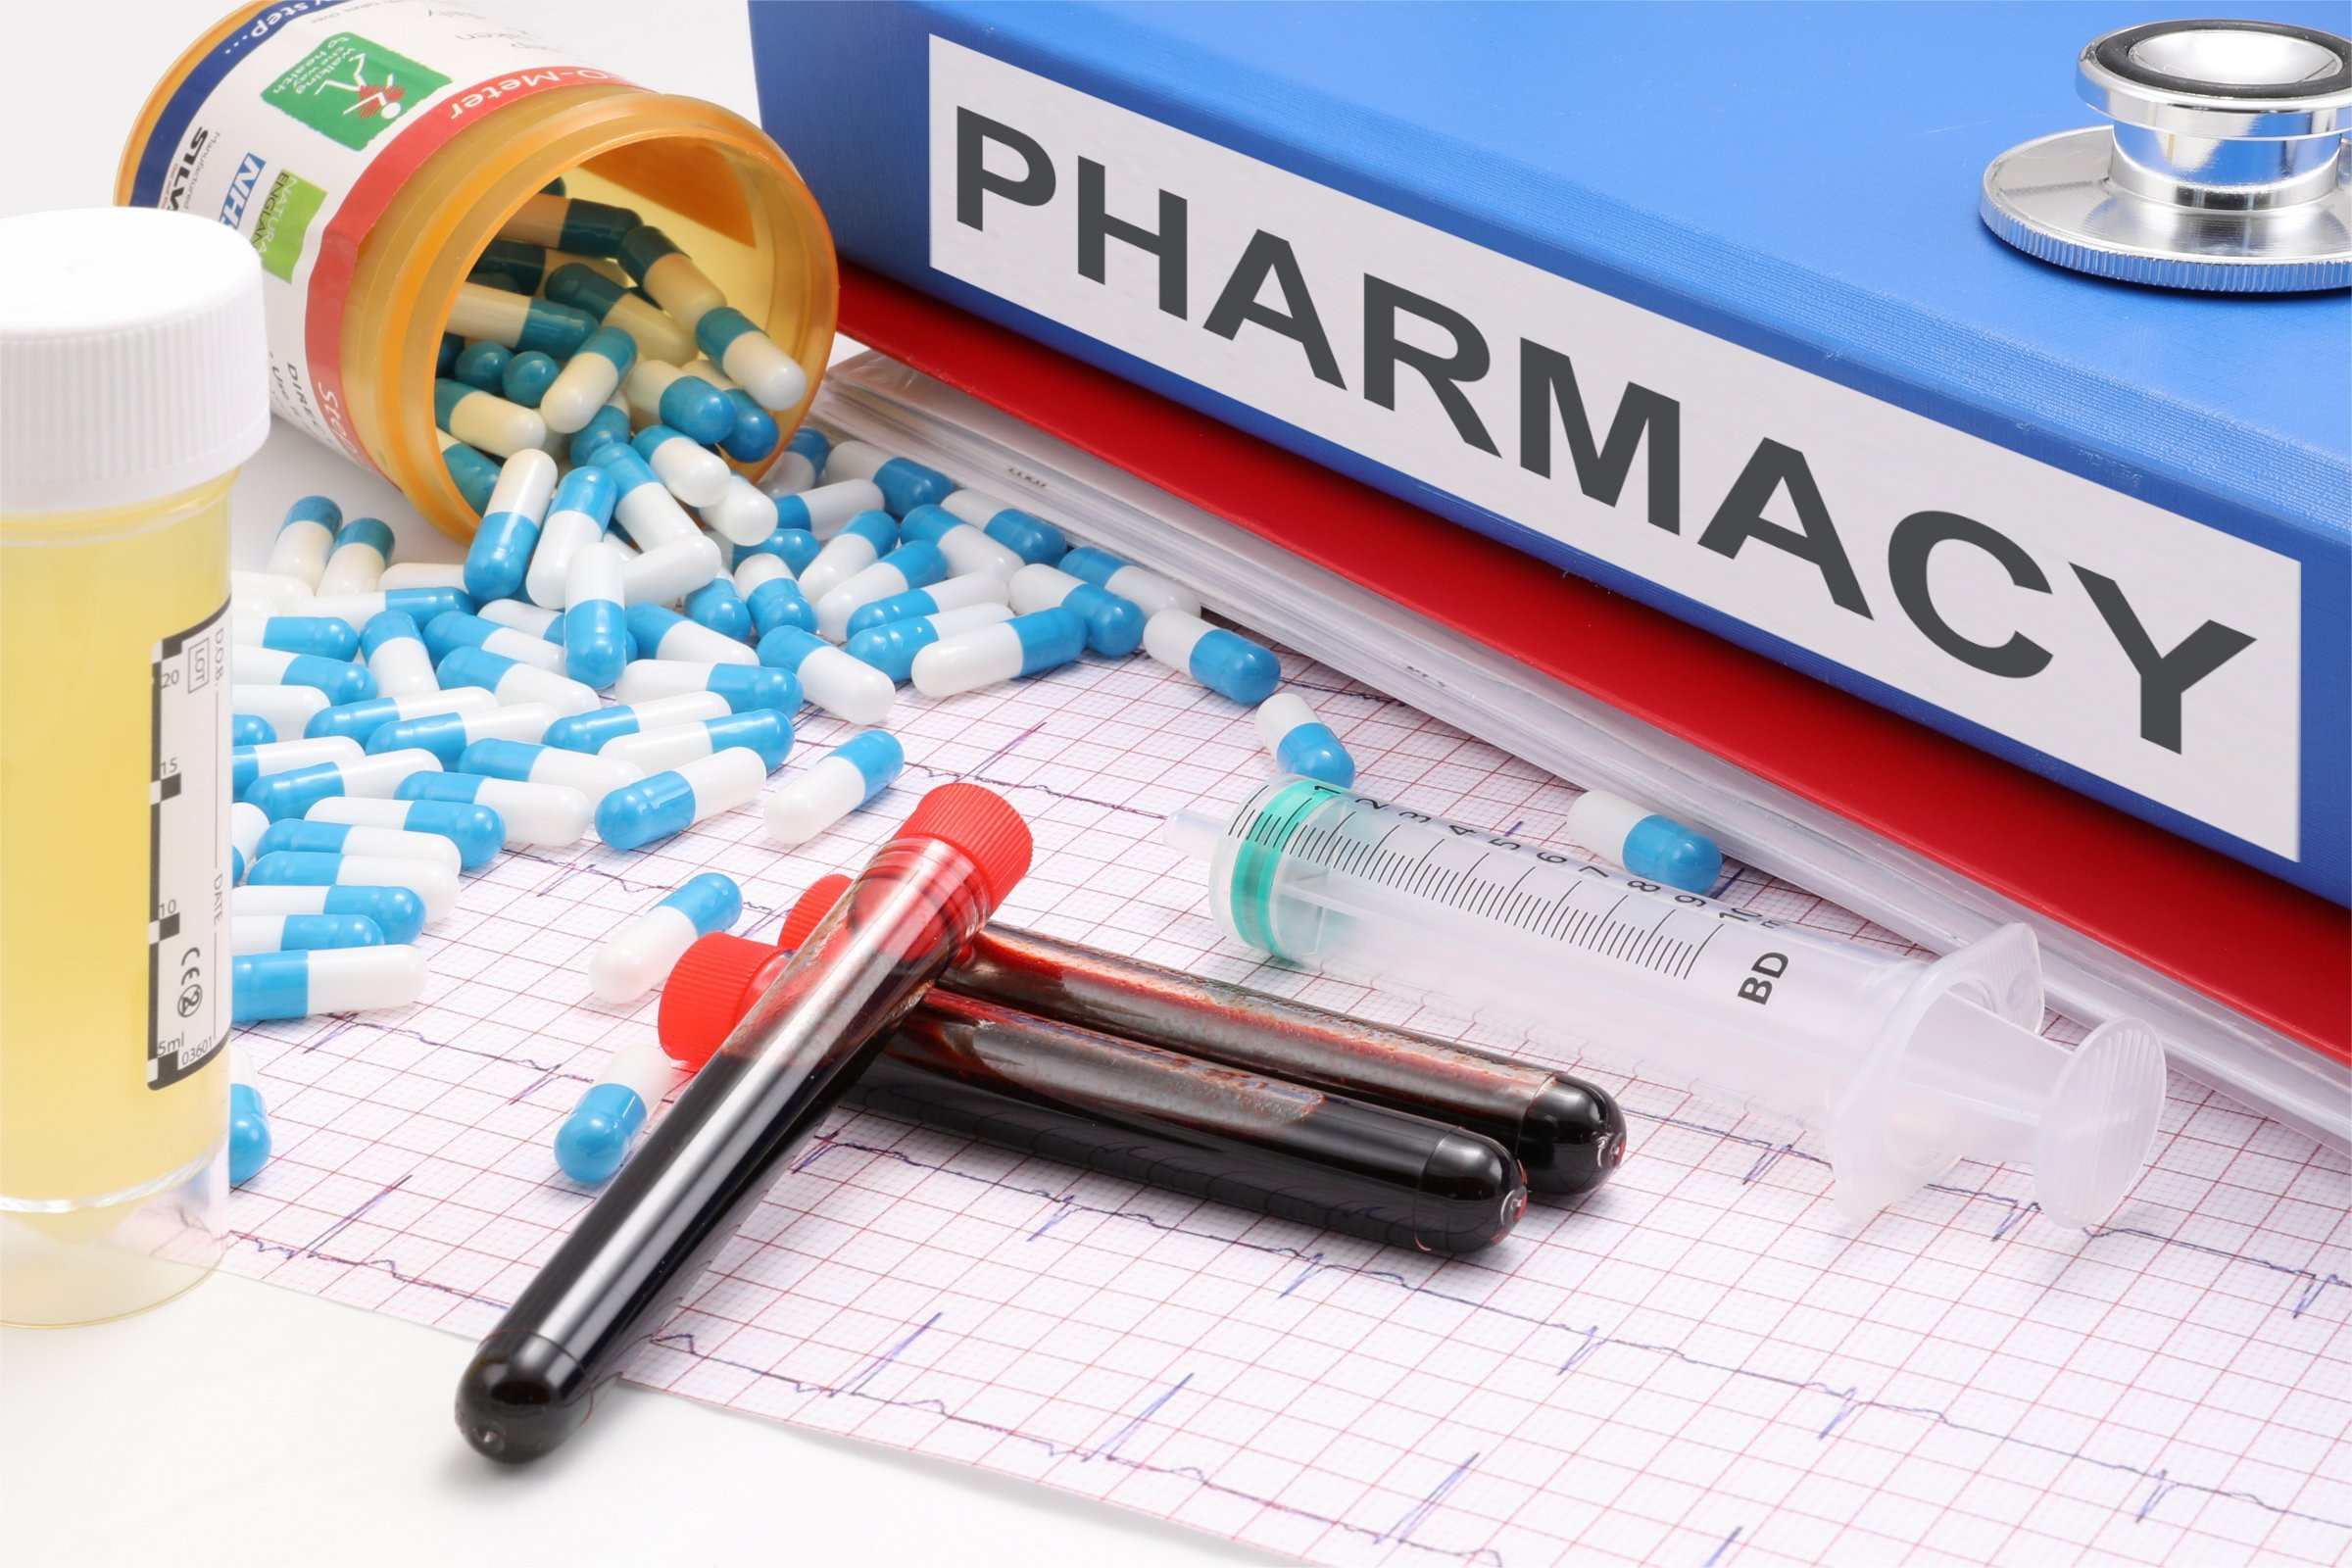 phd pharmacy & medical supplies